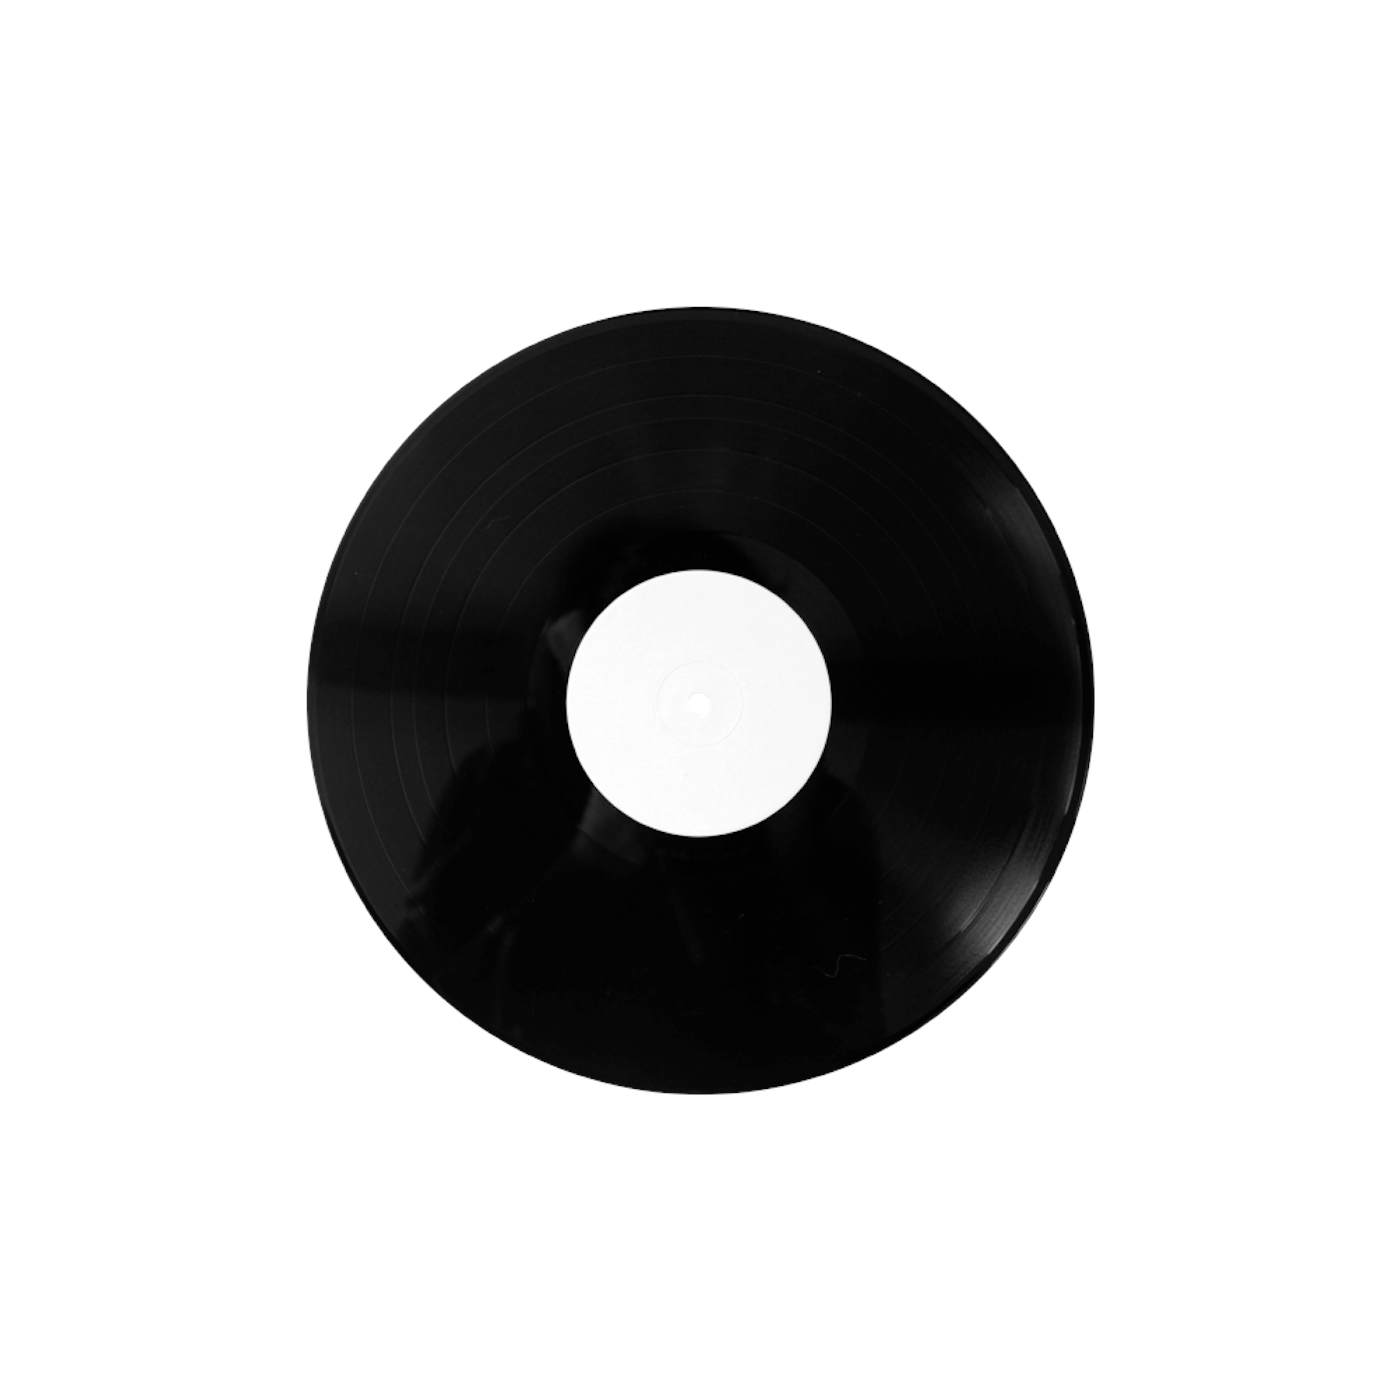 Della Mae Headlight Signed & Numbered LP Test Pressing (Vinyl)